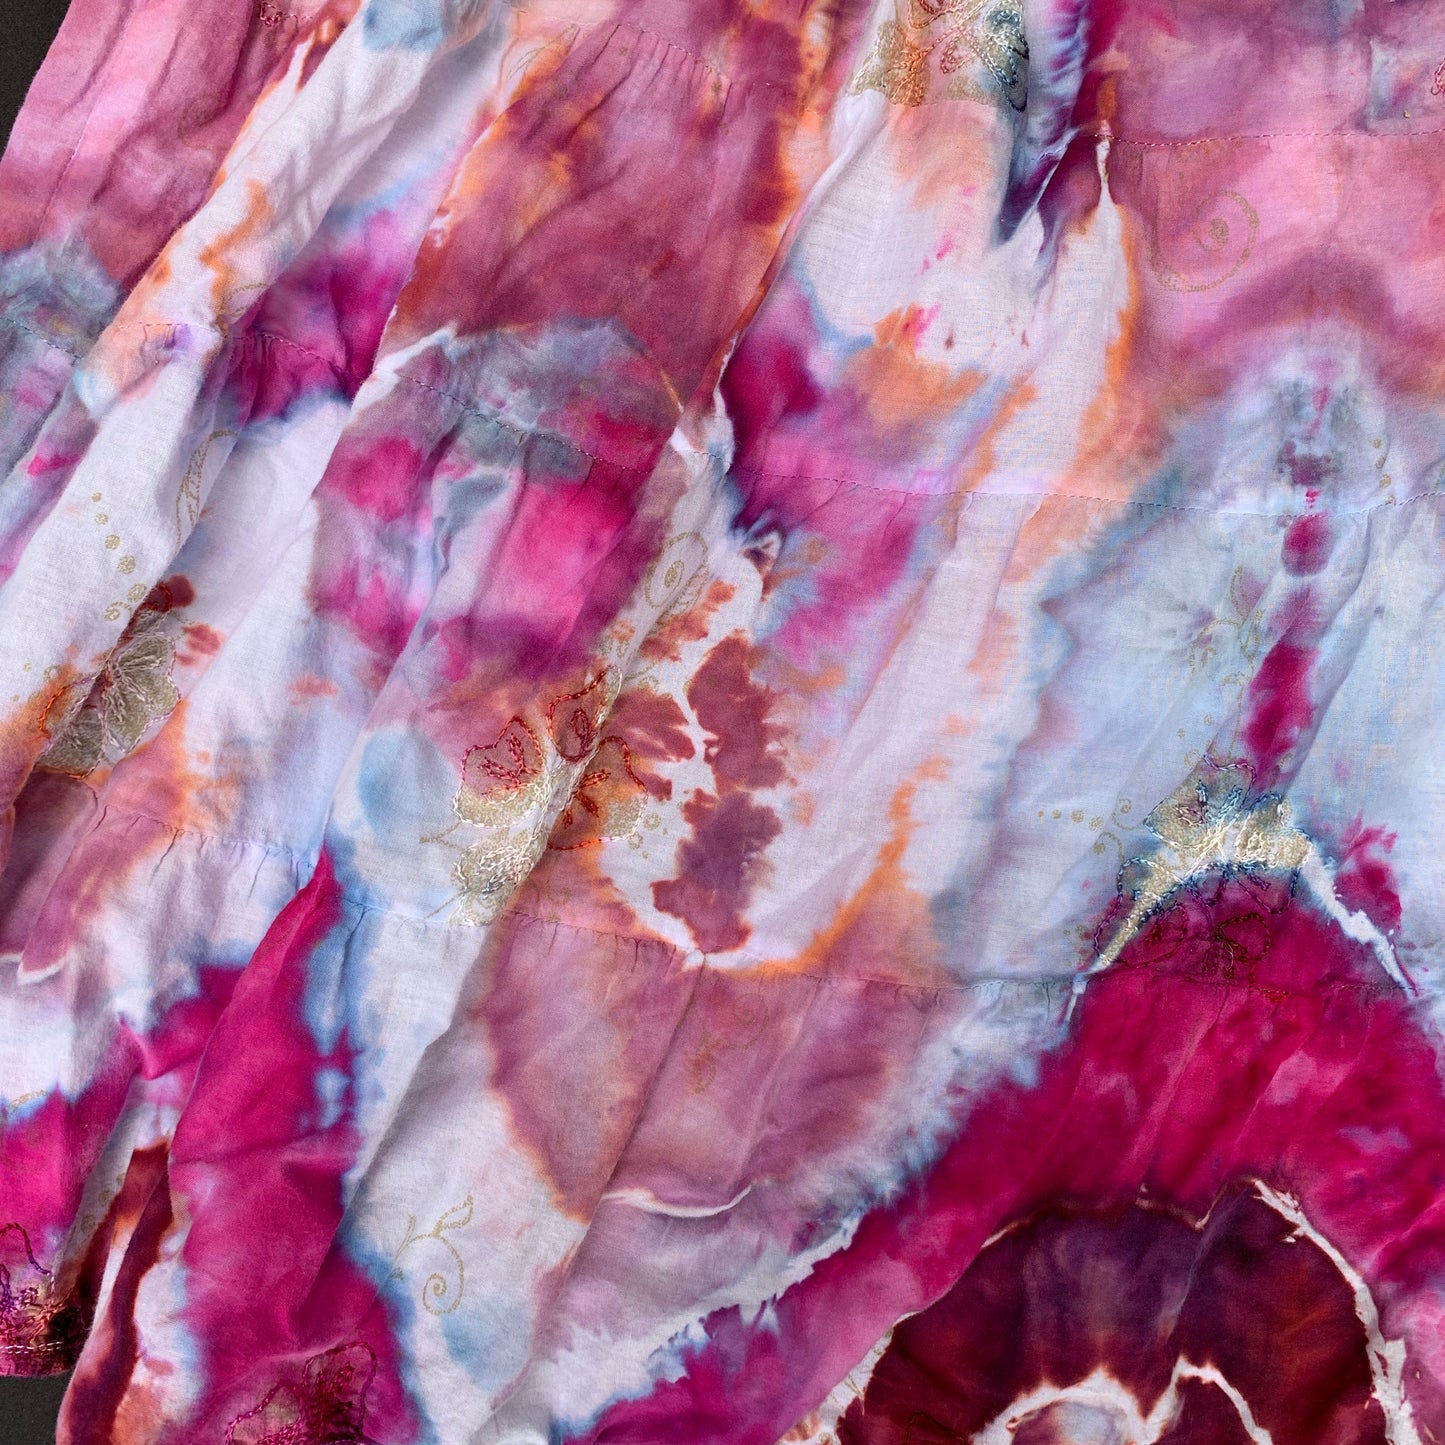 Stained Glass Fractals | Skirt | 34-46” waist